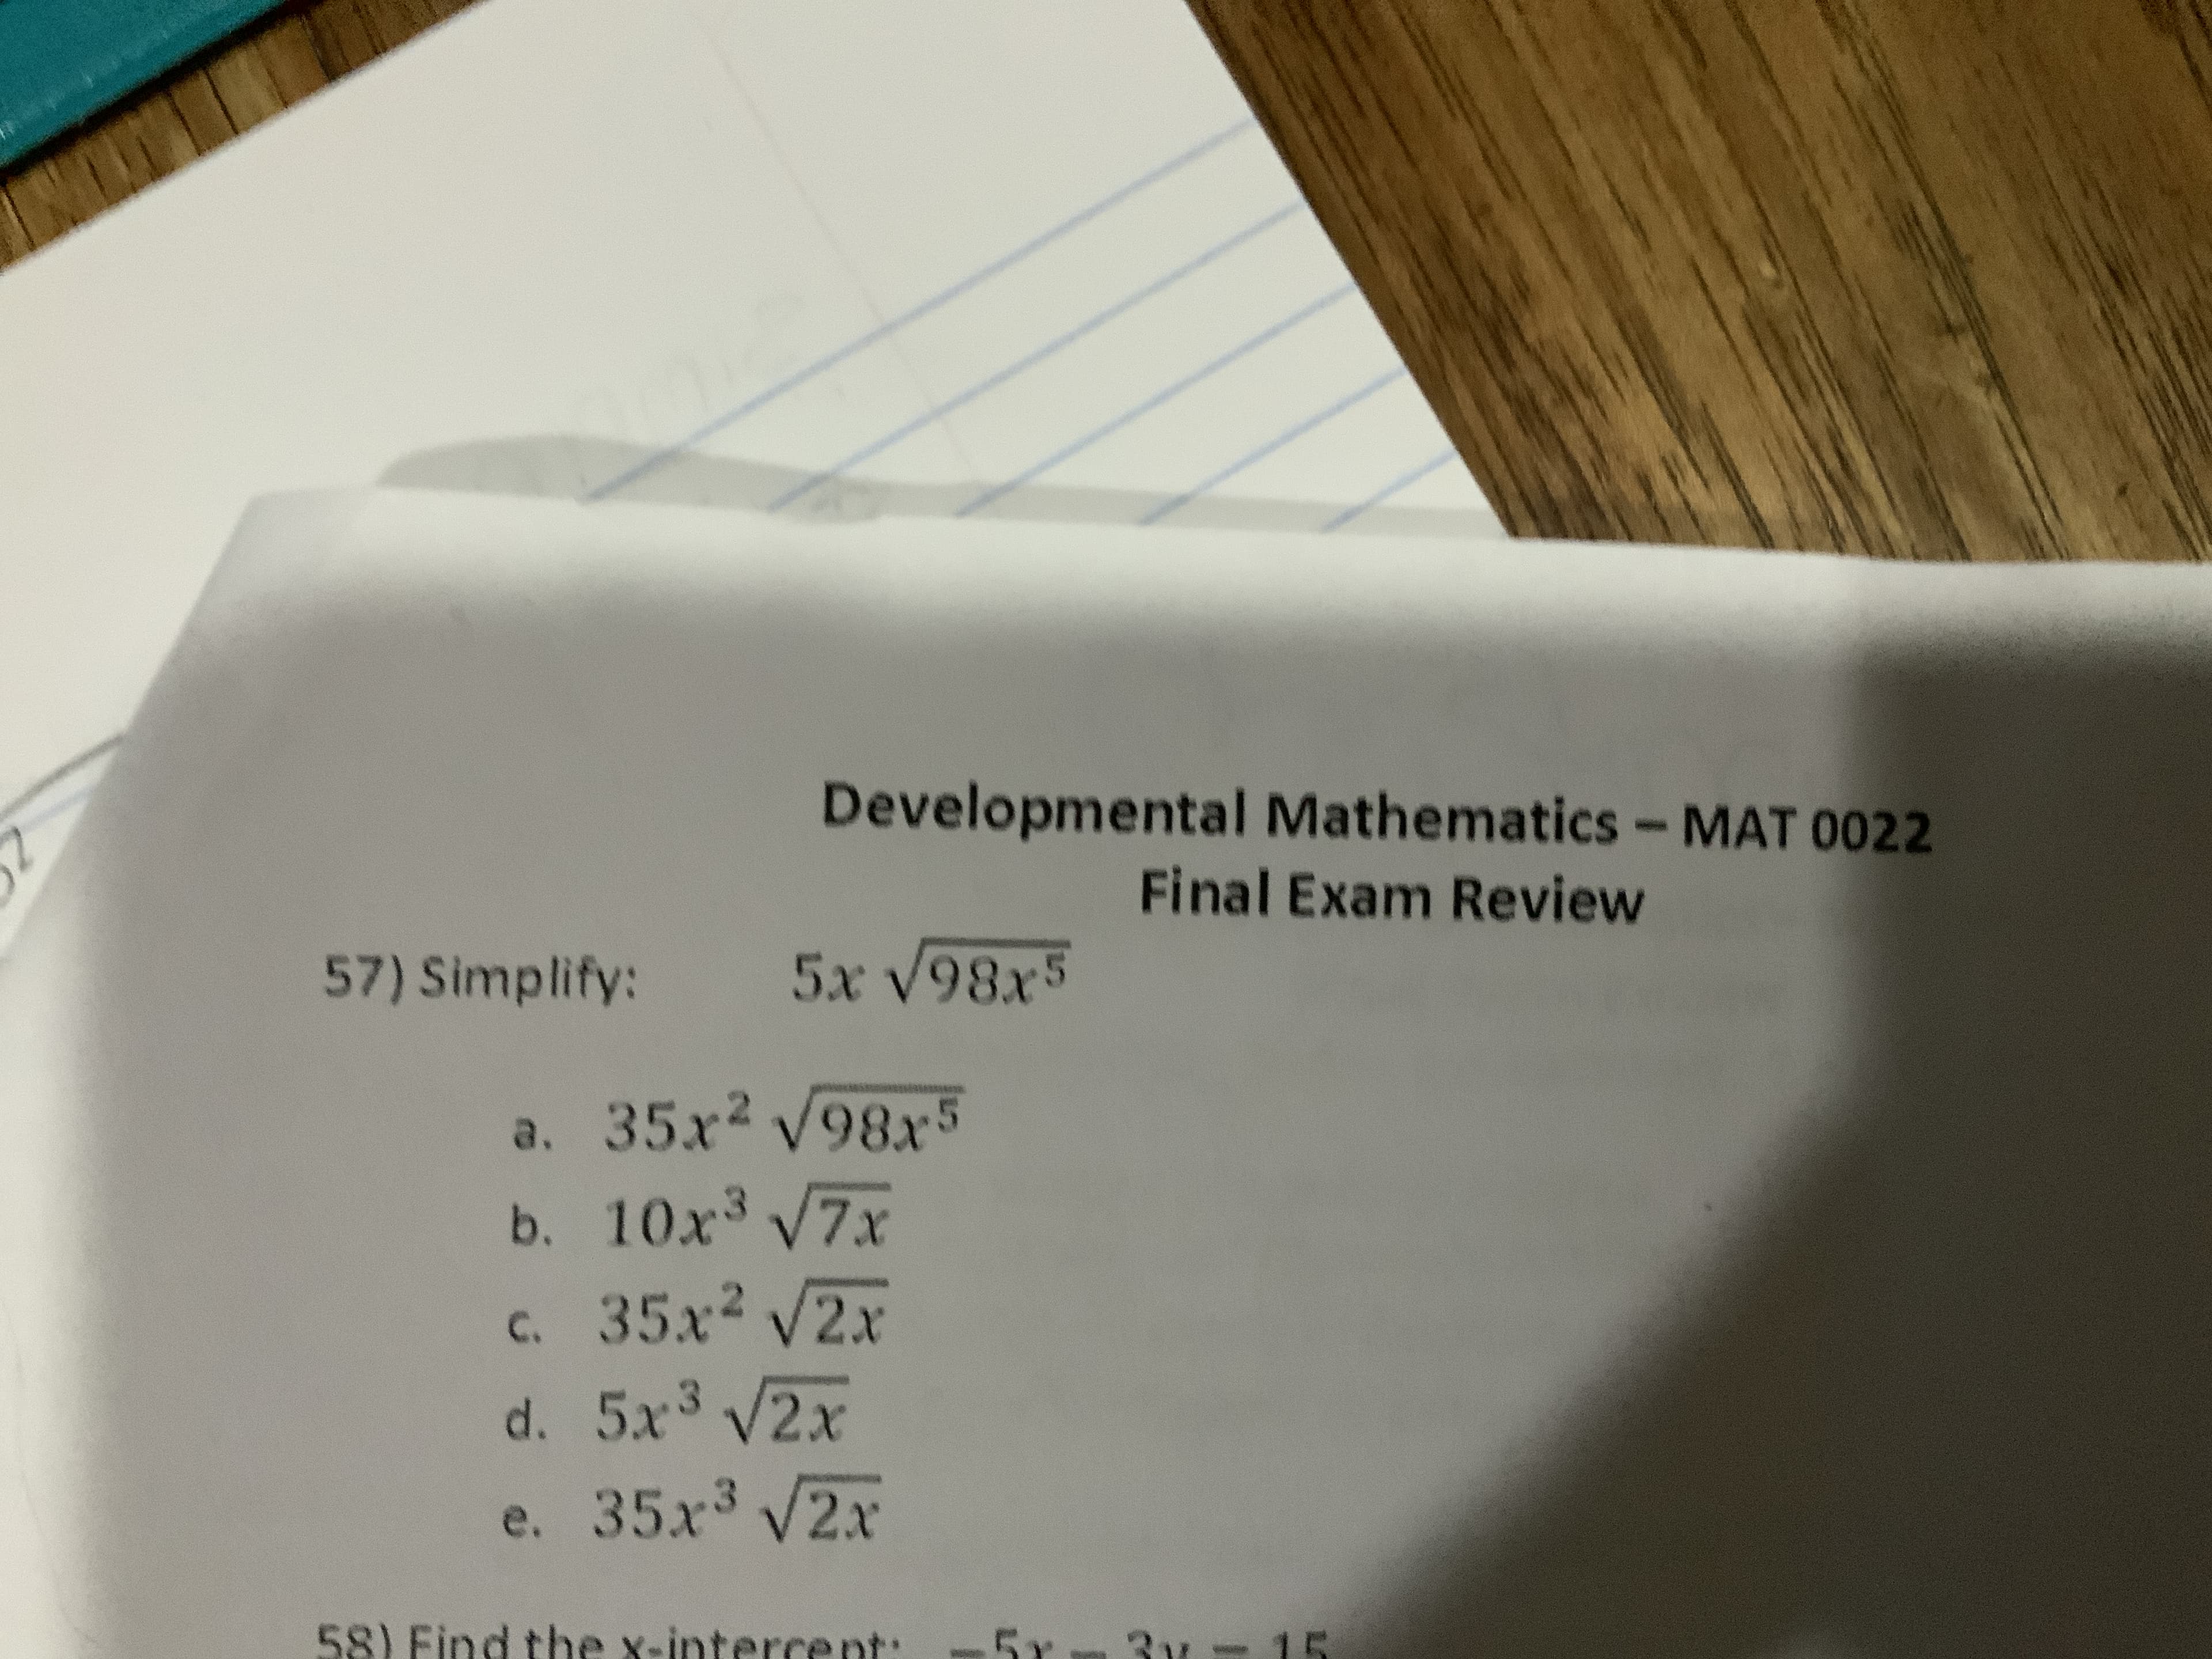 Developmental Mathematics - MAT 0022
Final Exam Review
57) Simplify: 5x V98x5
a. 35x2 98x5
b. 10x3 V7x
c. 35x2 V2x
d. 5x3 V2x
e. 35x3 V2x
5r 3 15
58) Find the x-interce nt:
